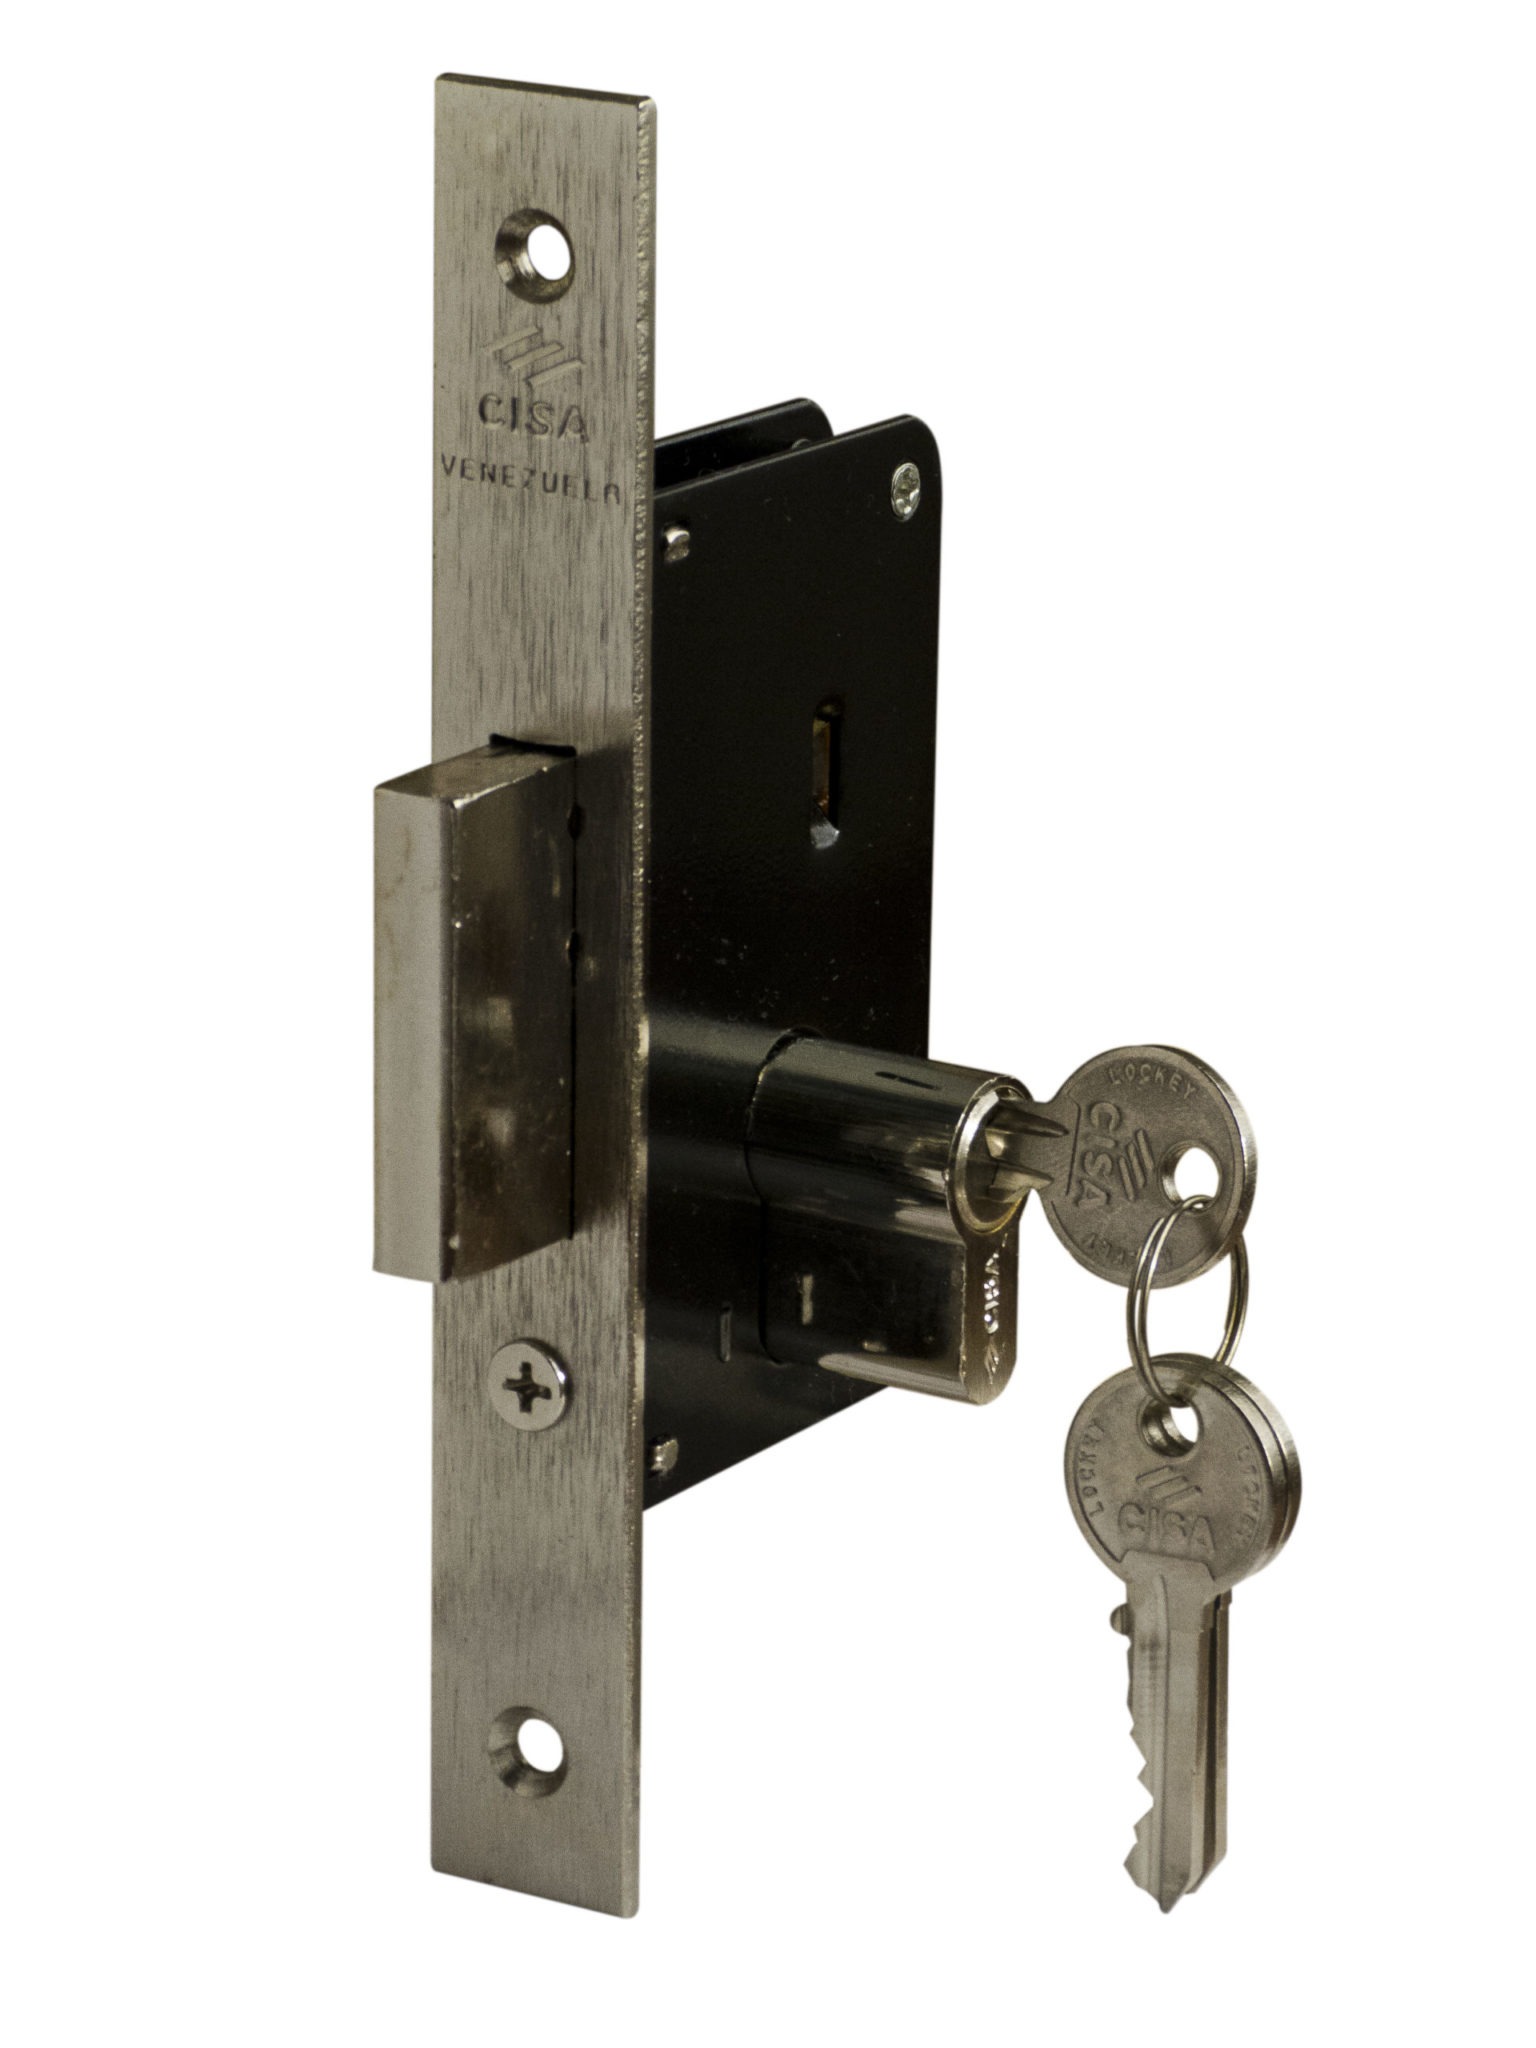 Mortise Door Lock 1 38” Or 35 Mm With 2 Key Turn Lockey Corp